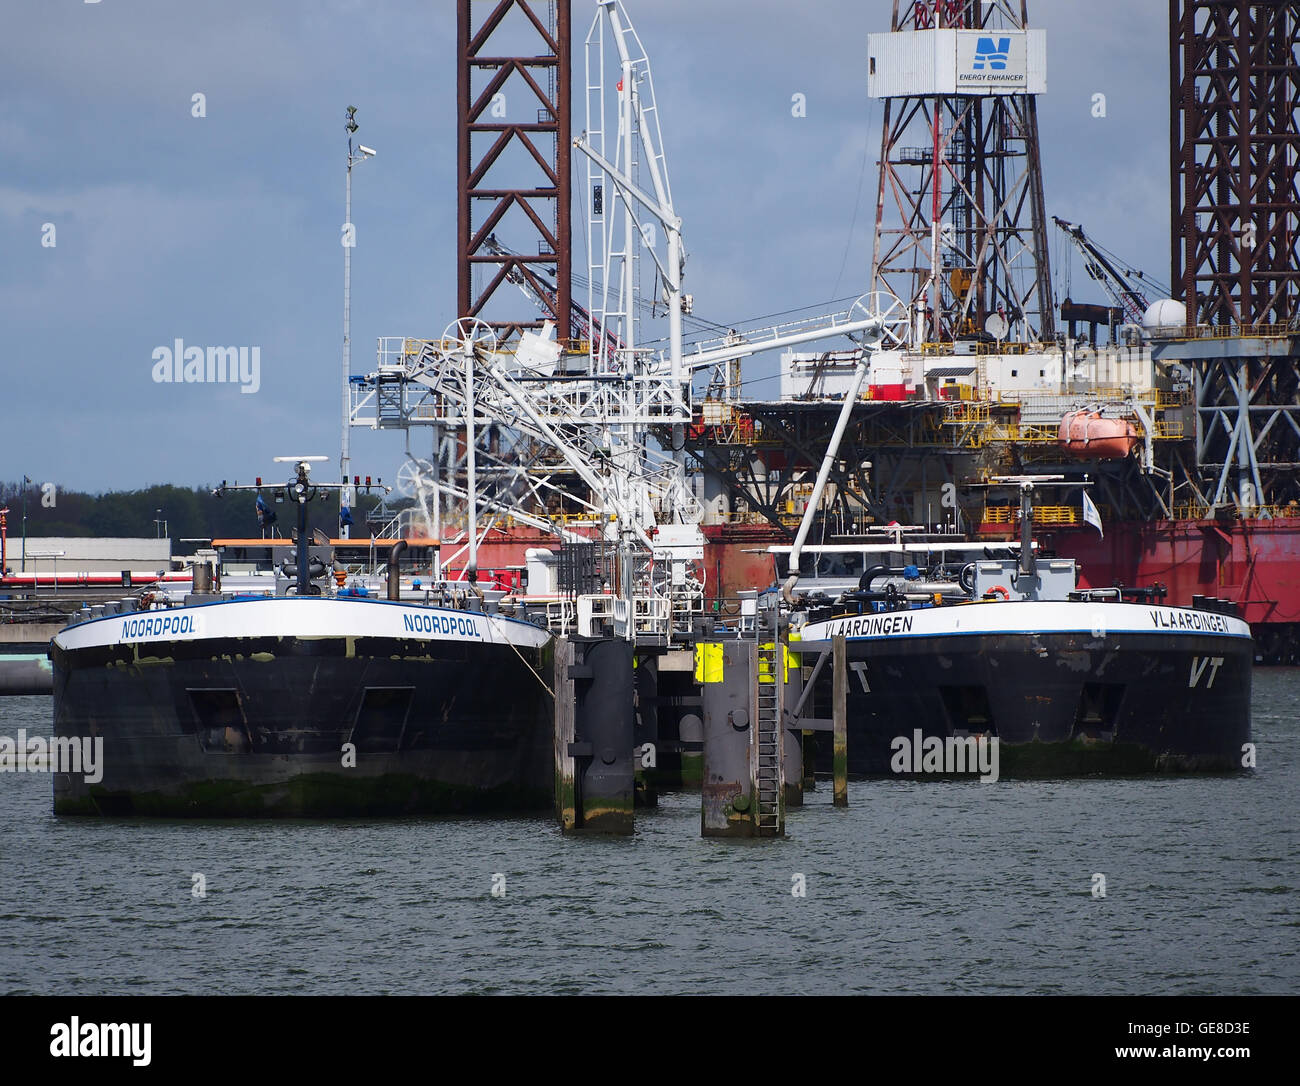 Noordpool (ship, 2004), ENI 02326516 & Vlaardingen (ship, 2006) ENI 02327378 Port of Rotterdam Stock Photo